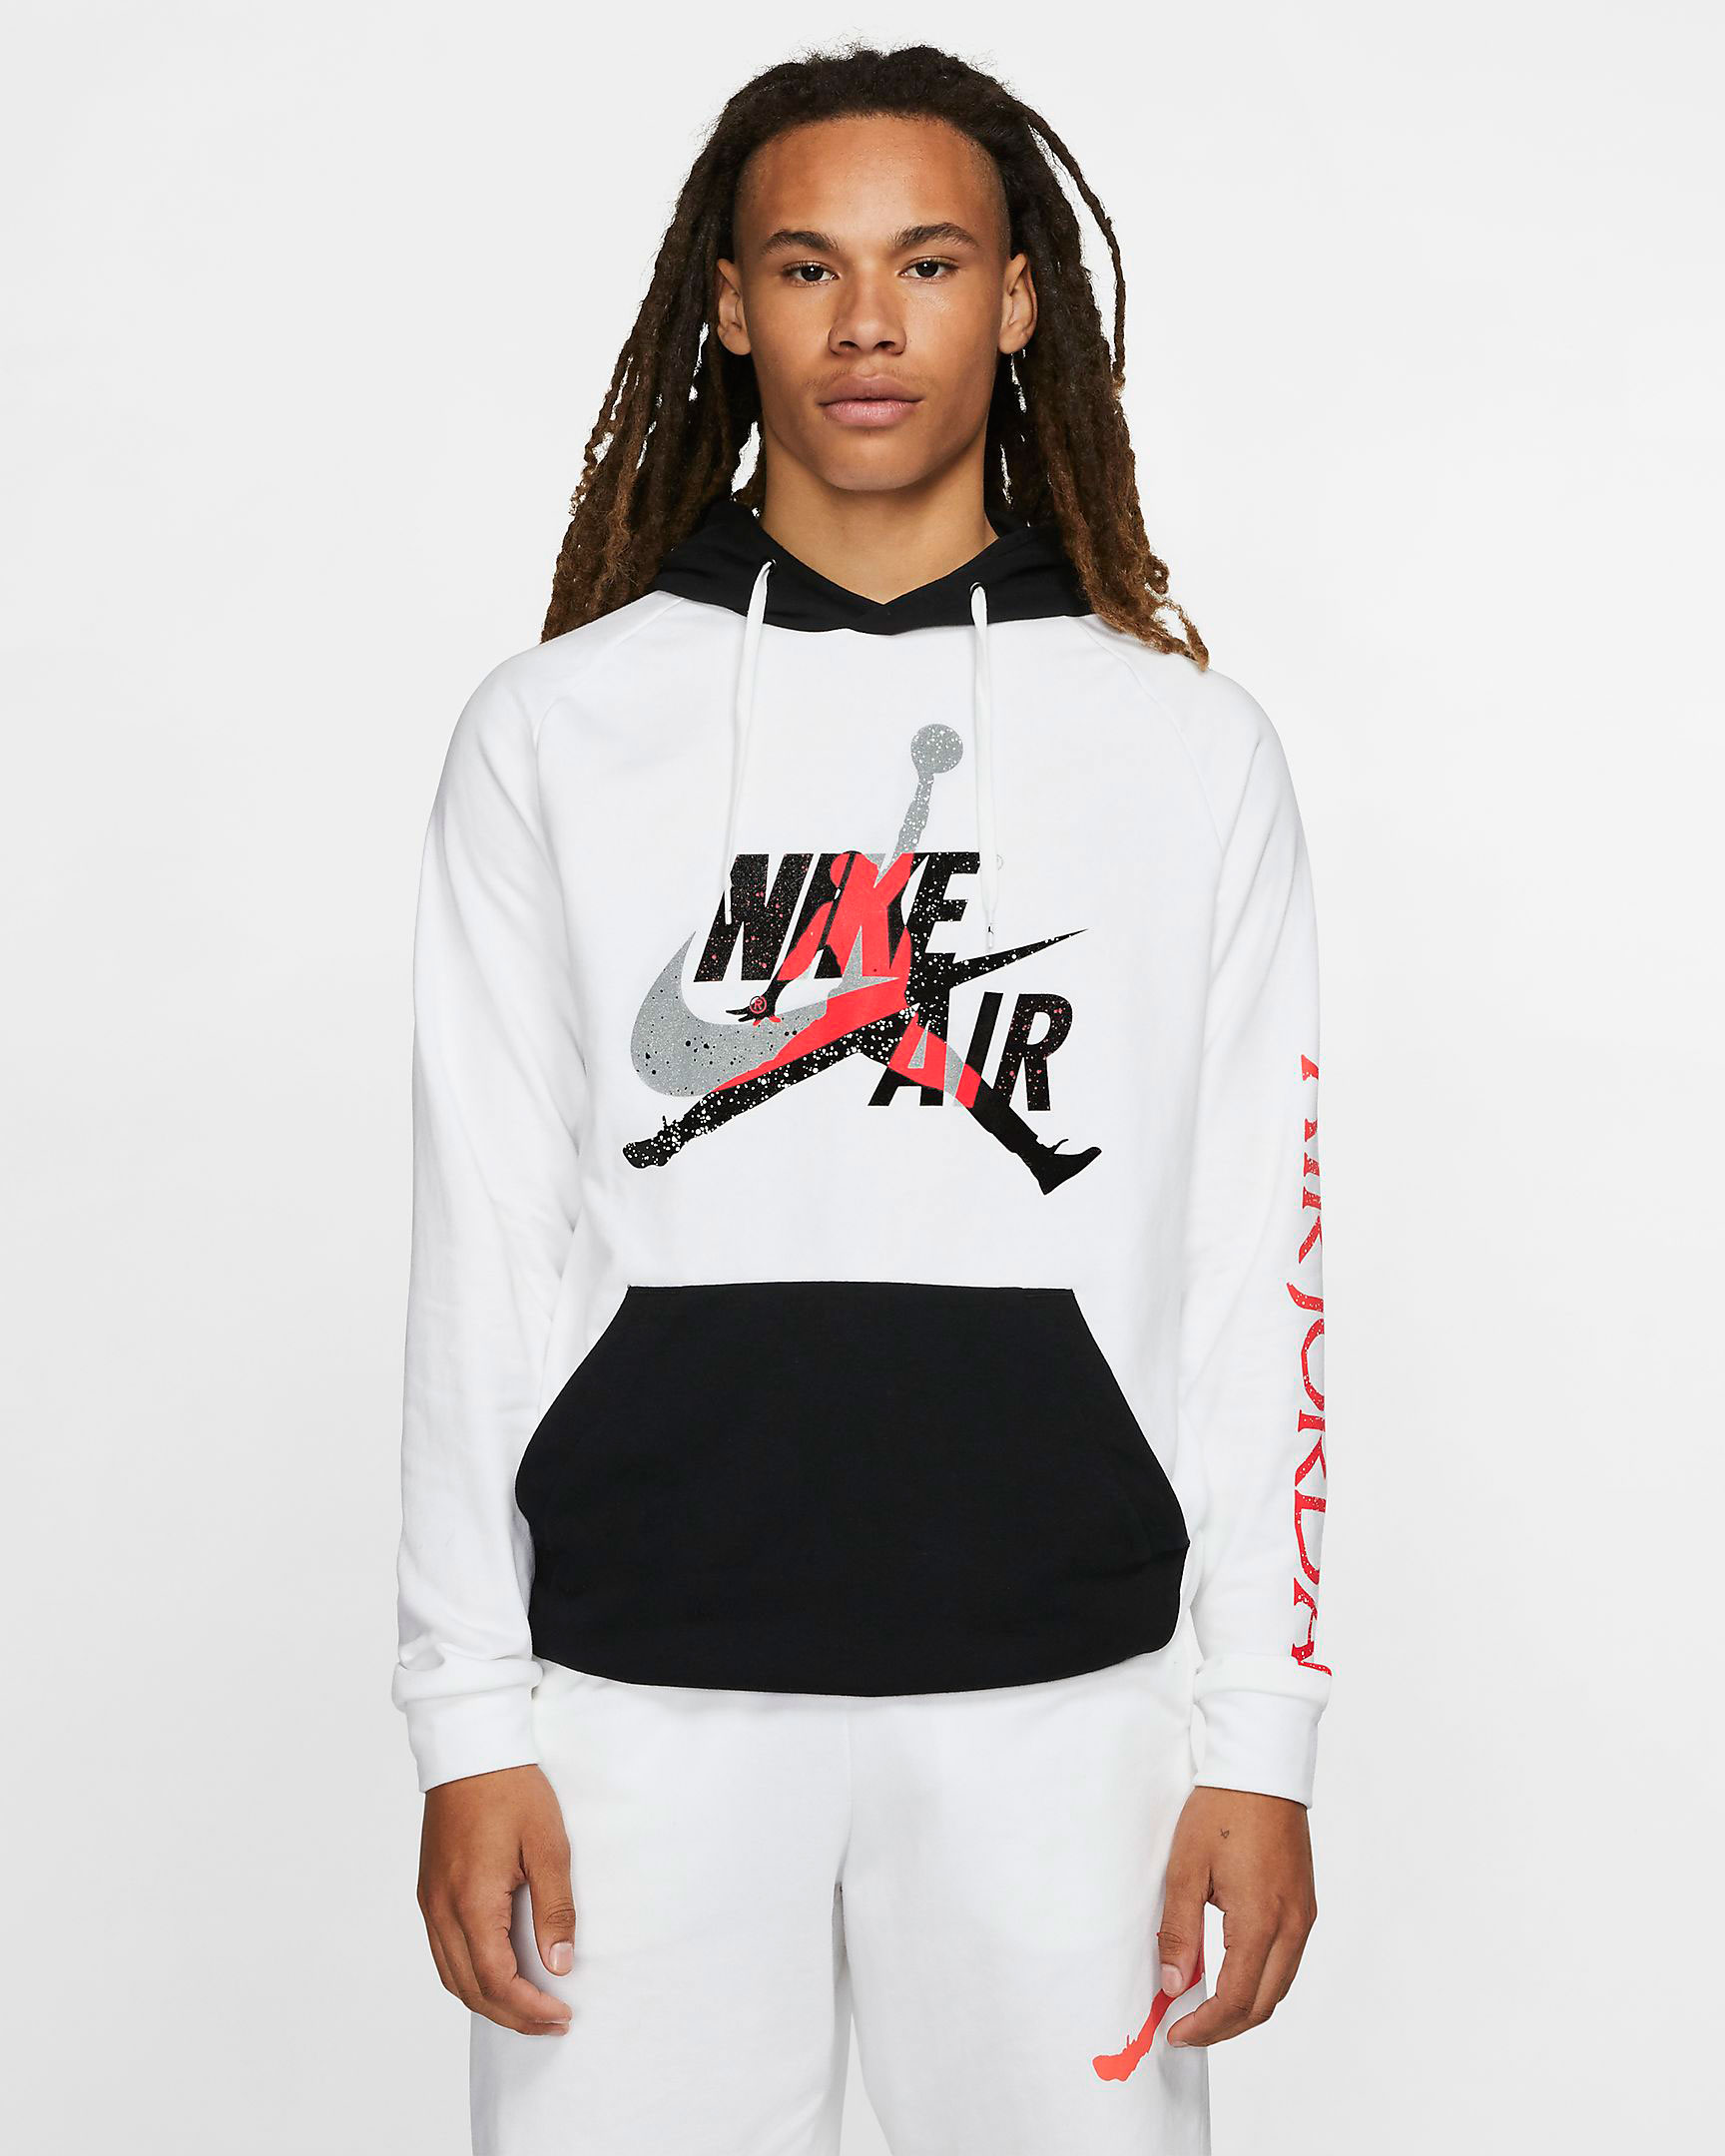 Air Jordan 34 Infrared Clothing to Match | SneakerFits.com